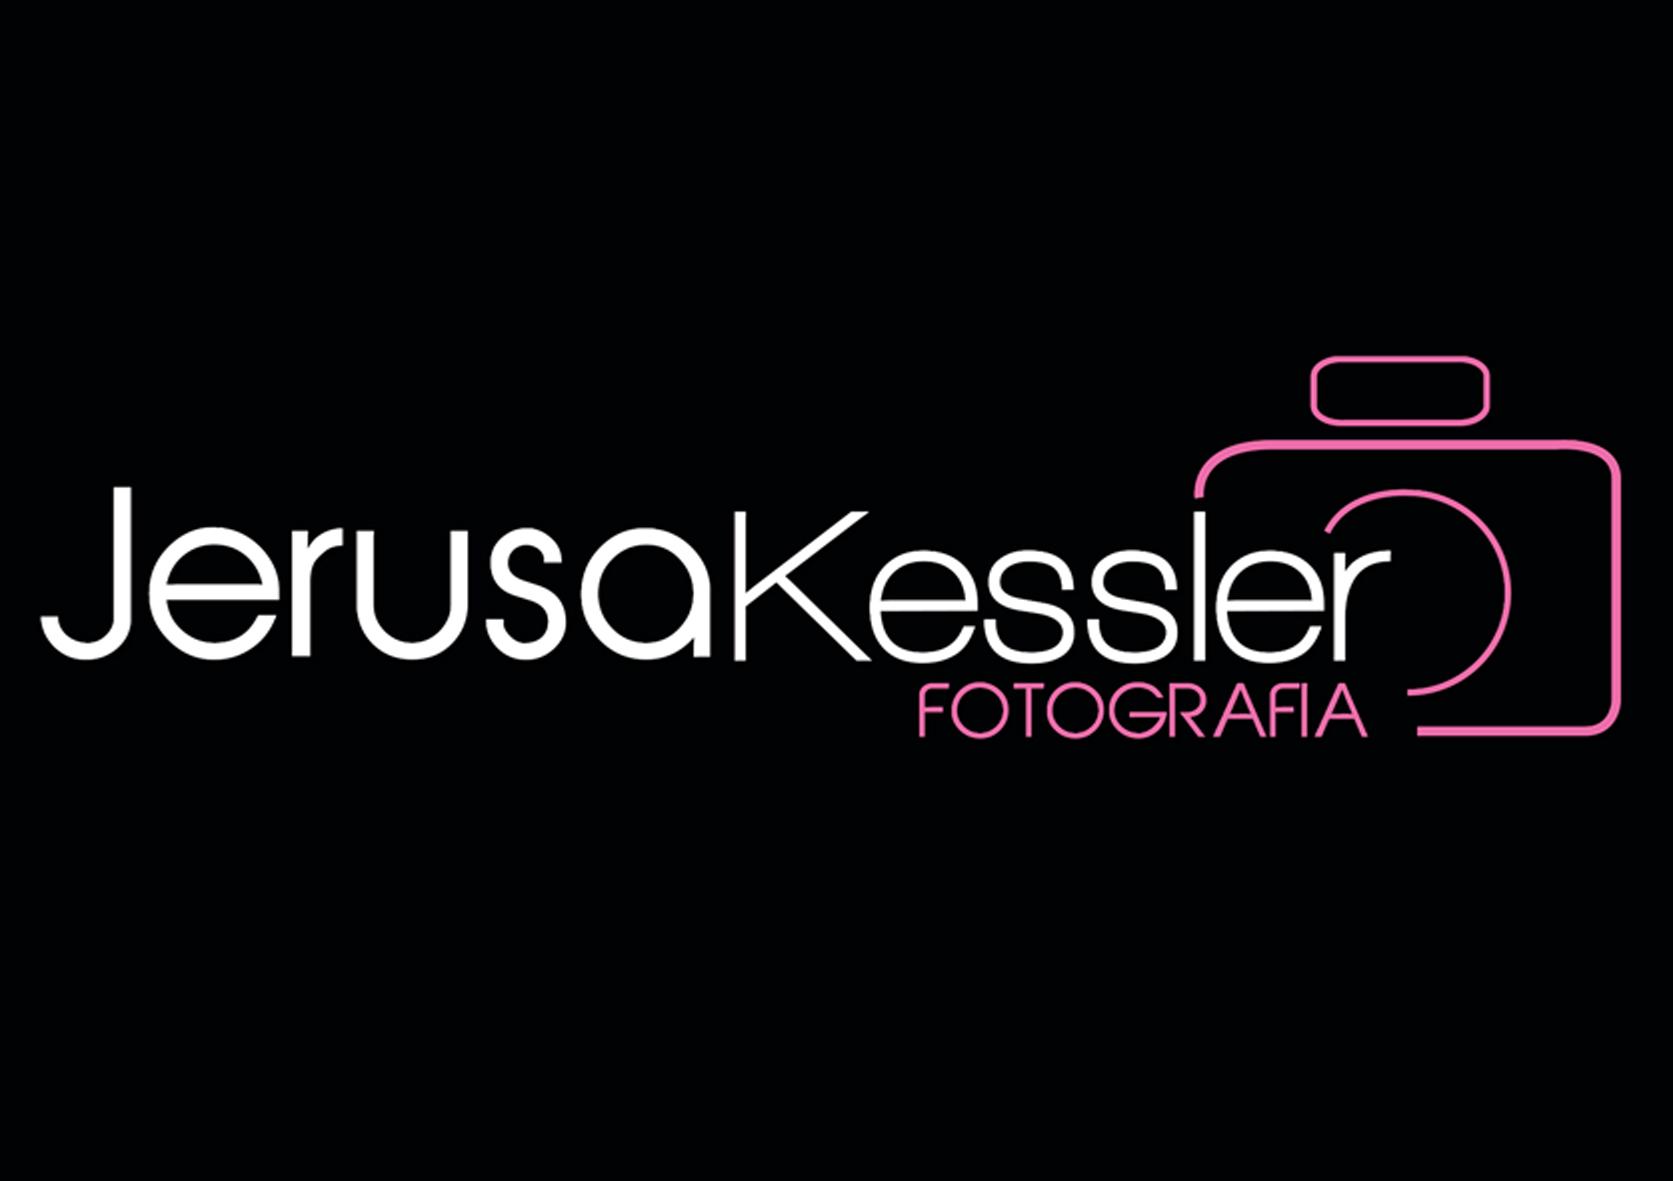 Jerusa Kessler Fotografia logo